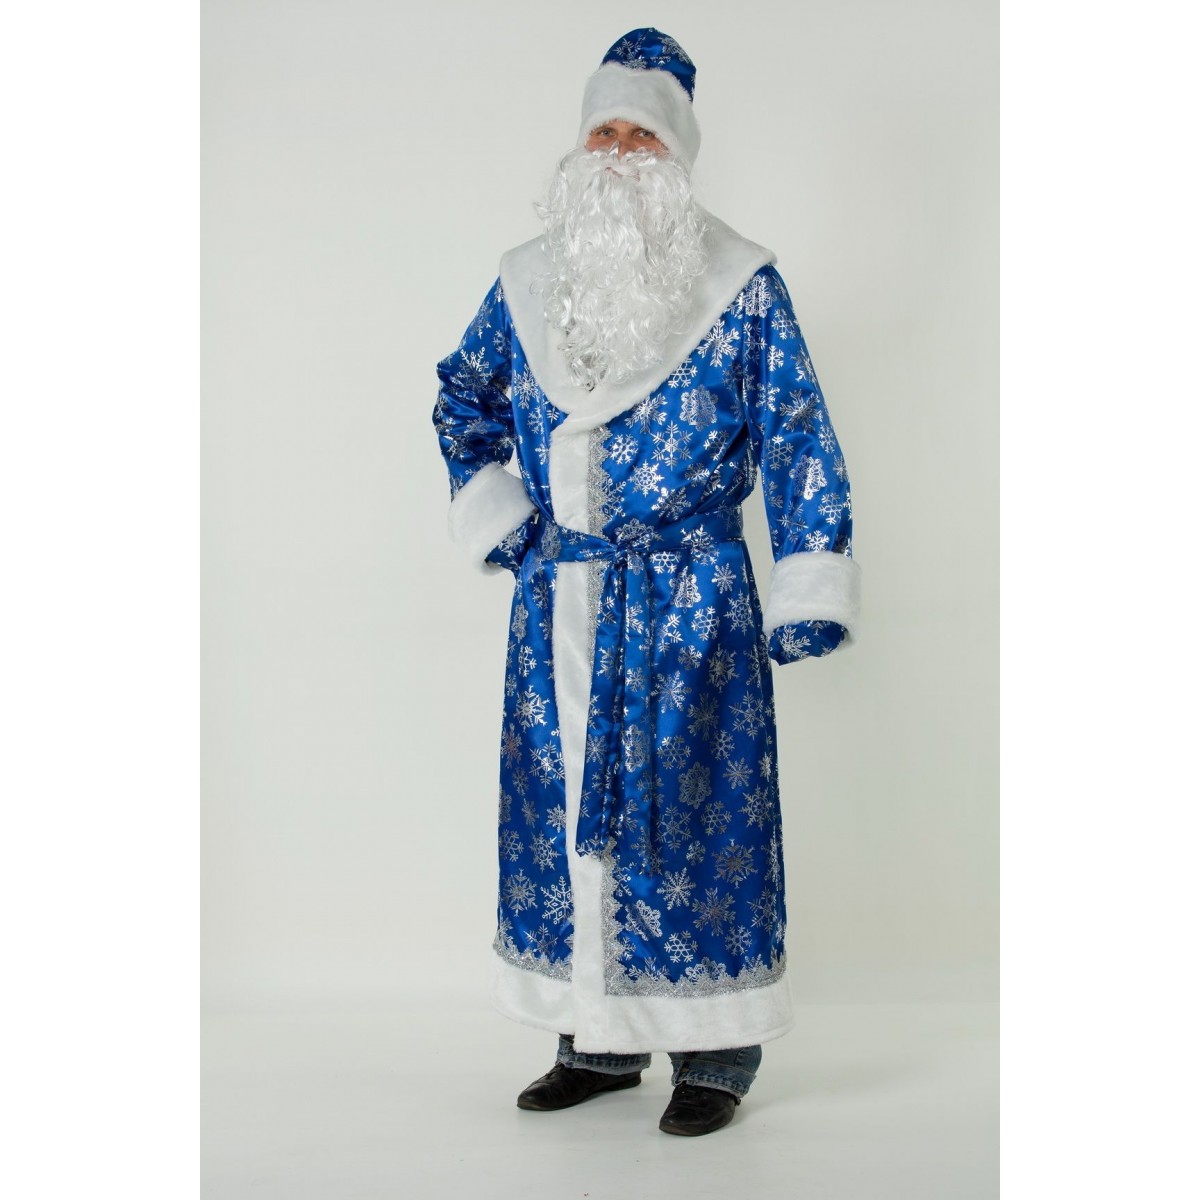 Костюм Деда Мороза, новогодний костюм Дед Мороз классический, сатиновый, синий, Батик